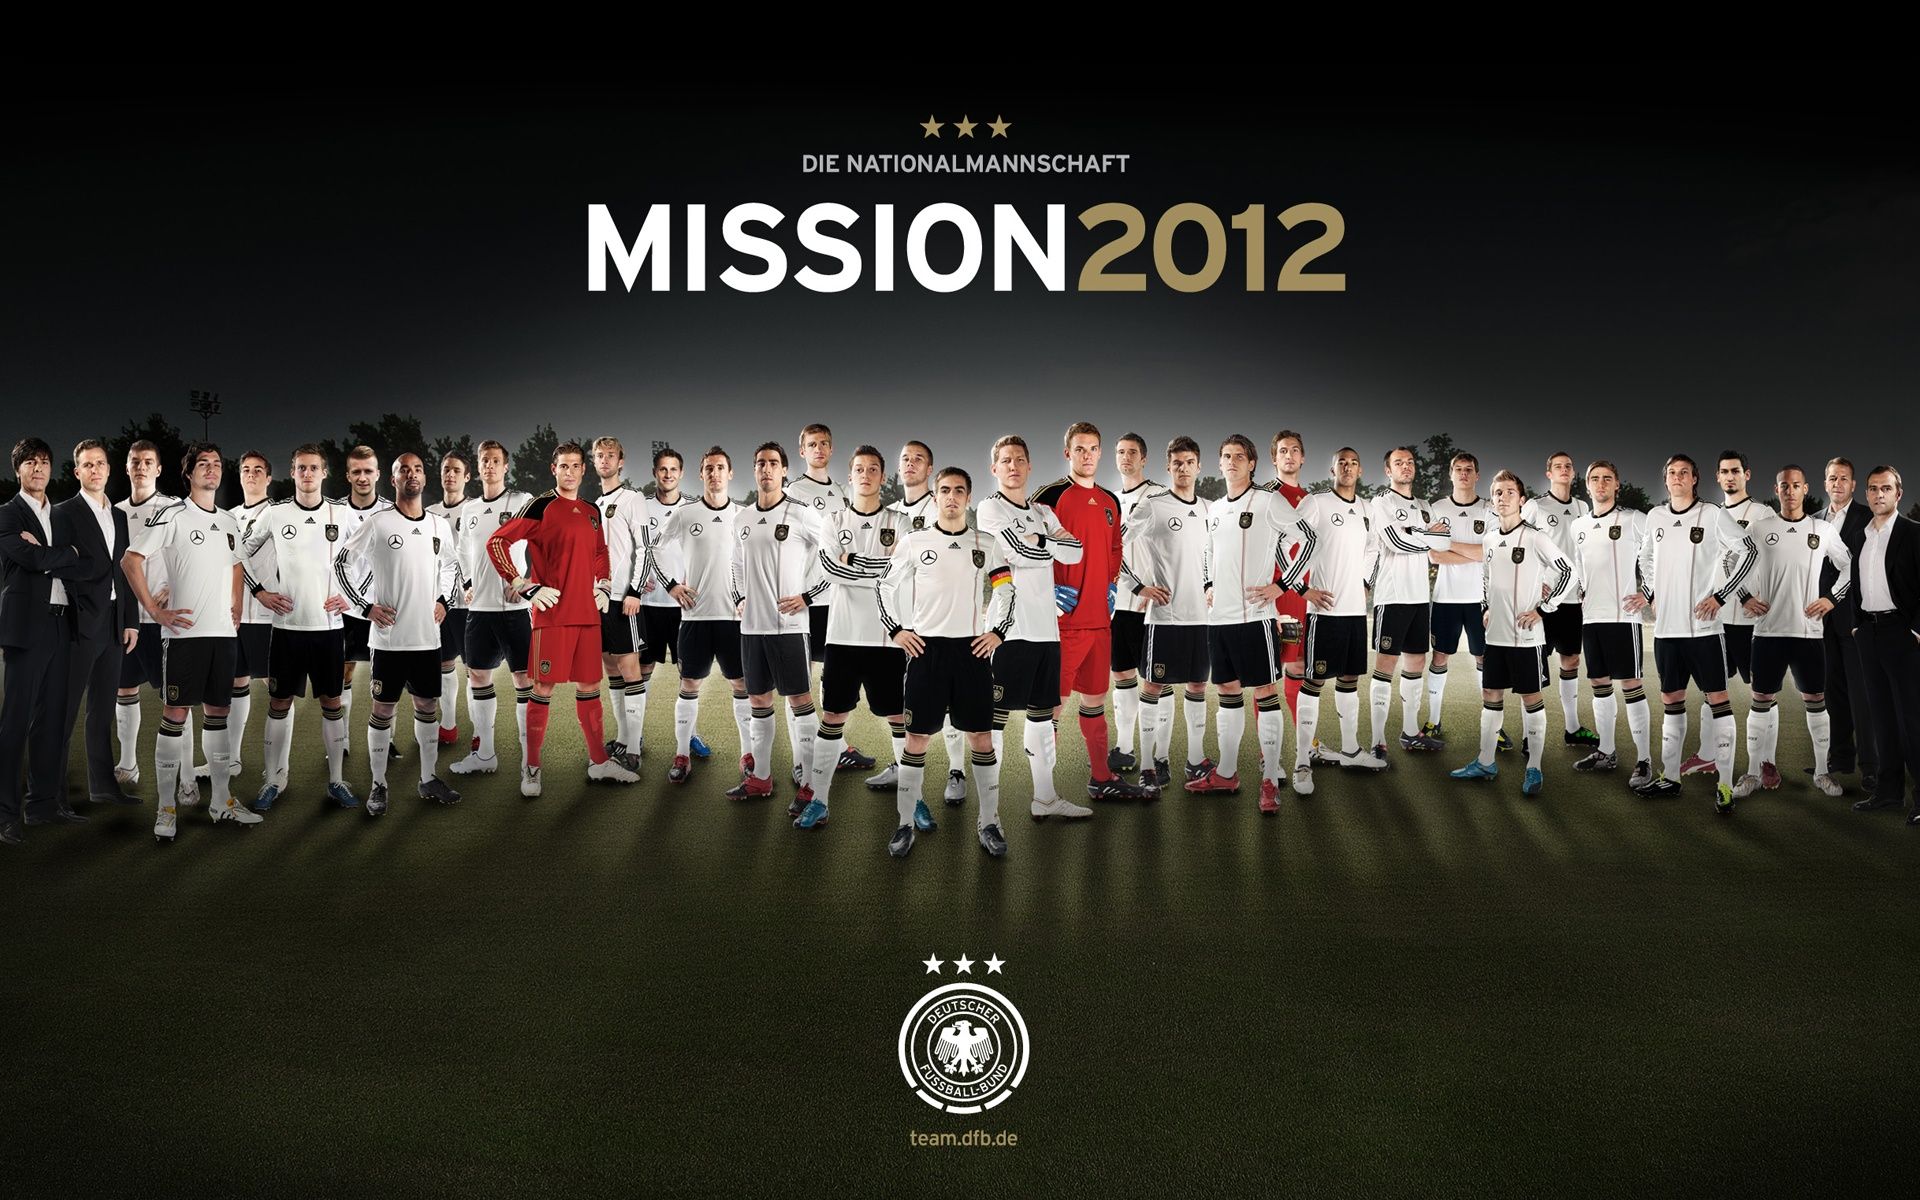 EURO 2012 wallpapers in HD - European Football Championship pics